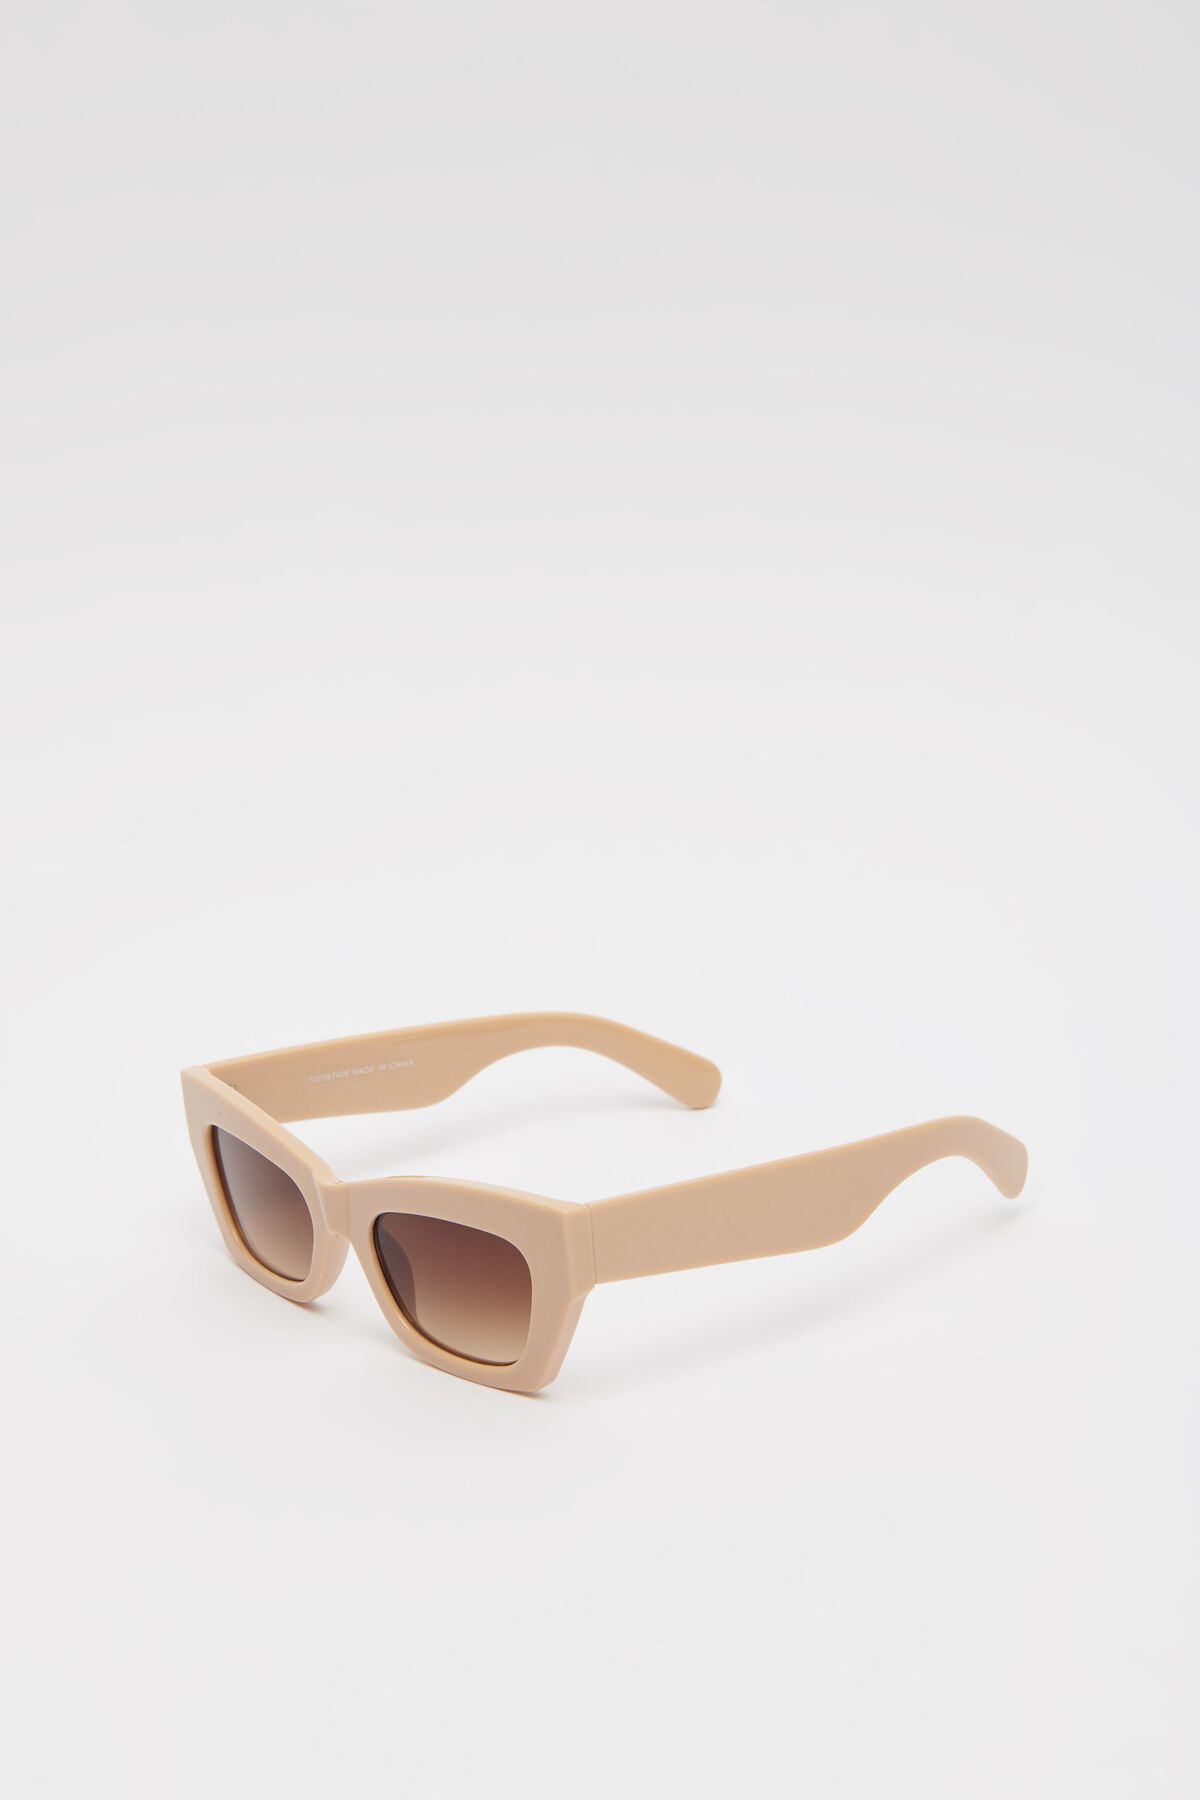 Dynamite Oval Cat-Eye Sunglasses. 6